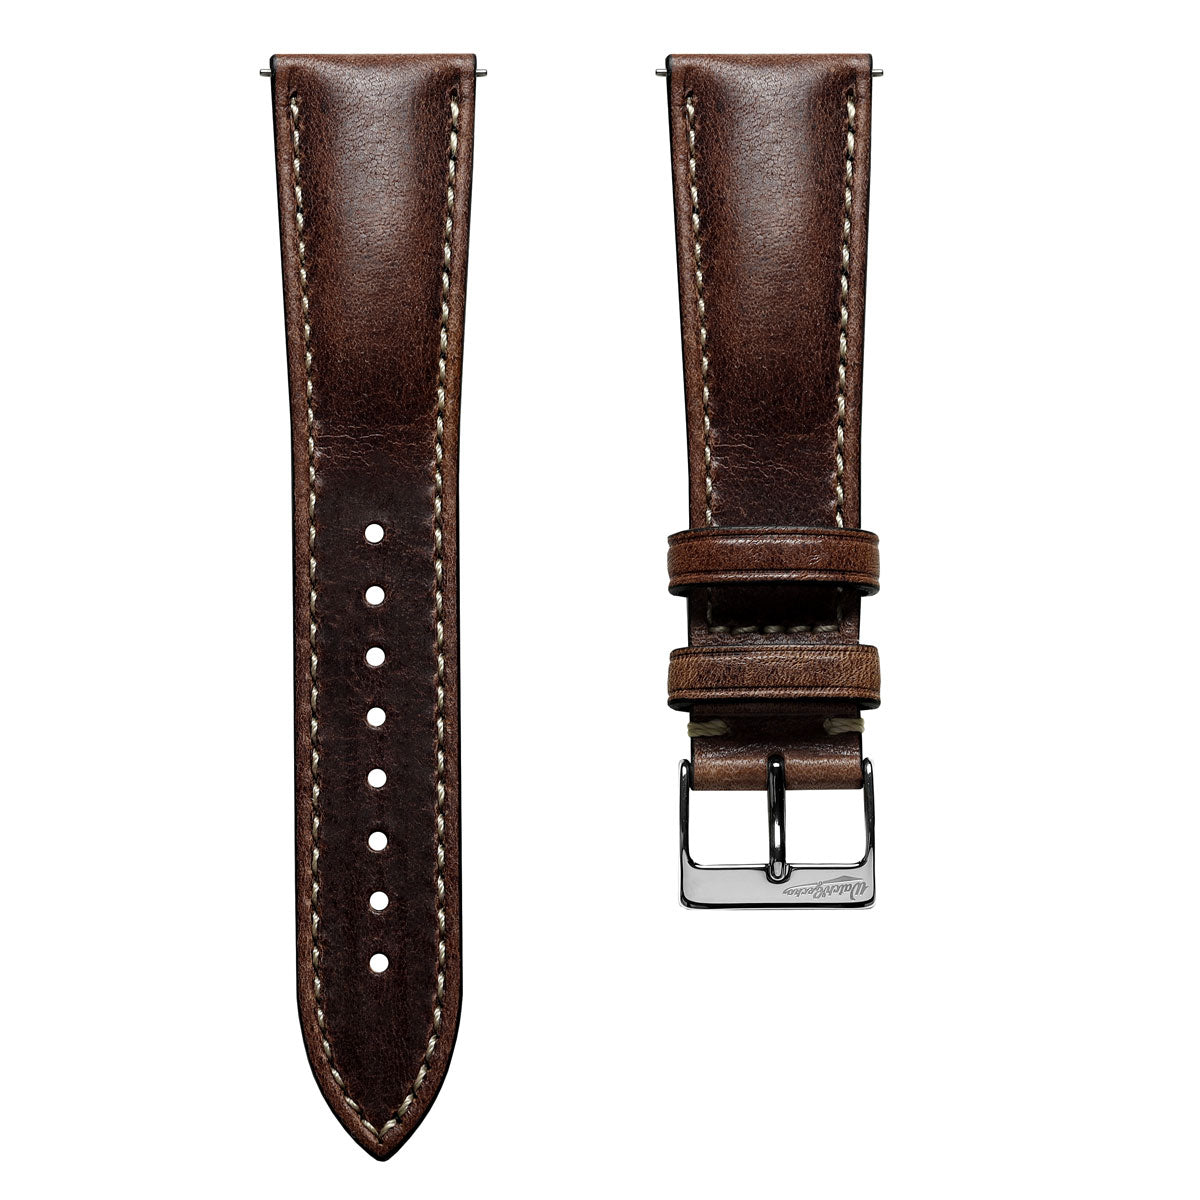 Classic Highley Genuine Leather Watch Strap - Chocolate Brown | WatchGecko